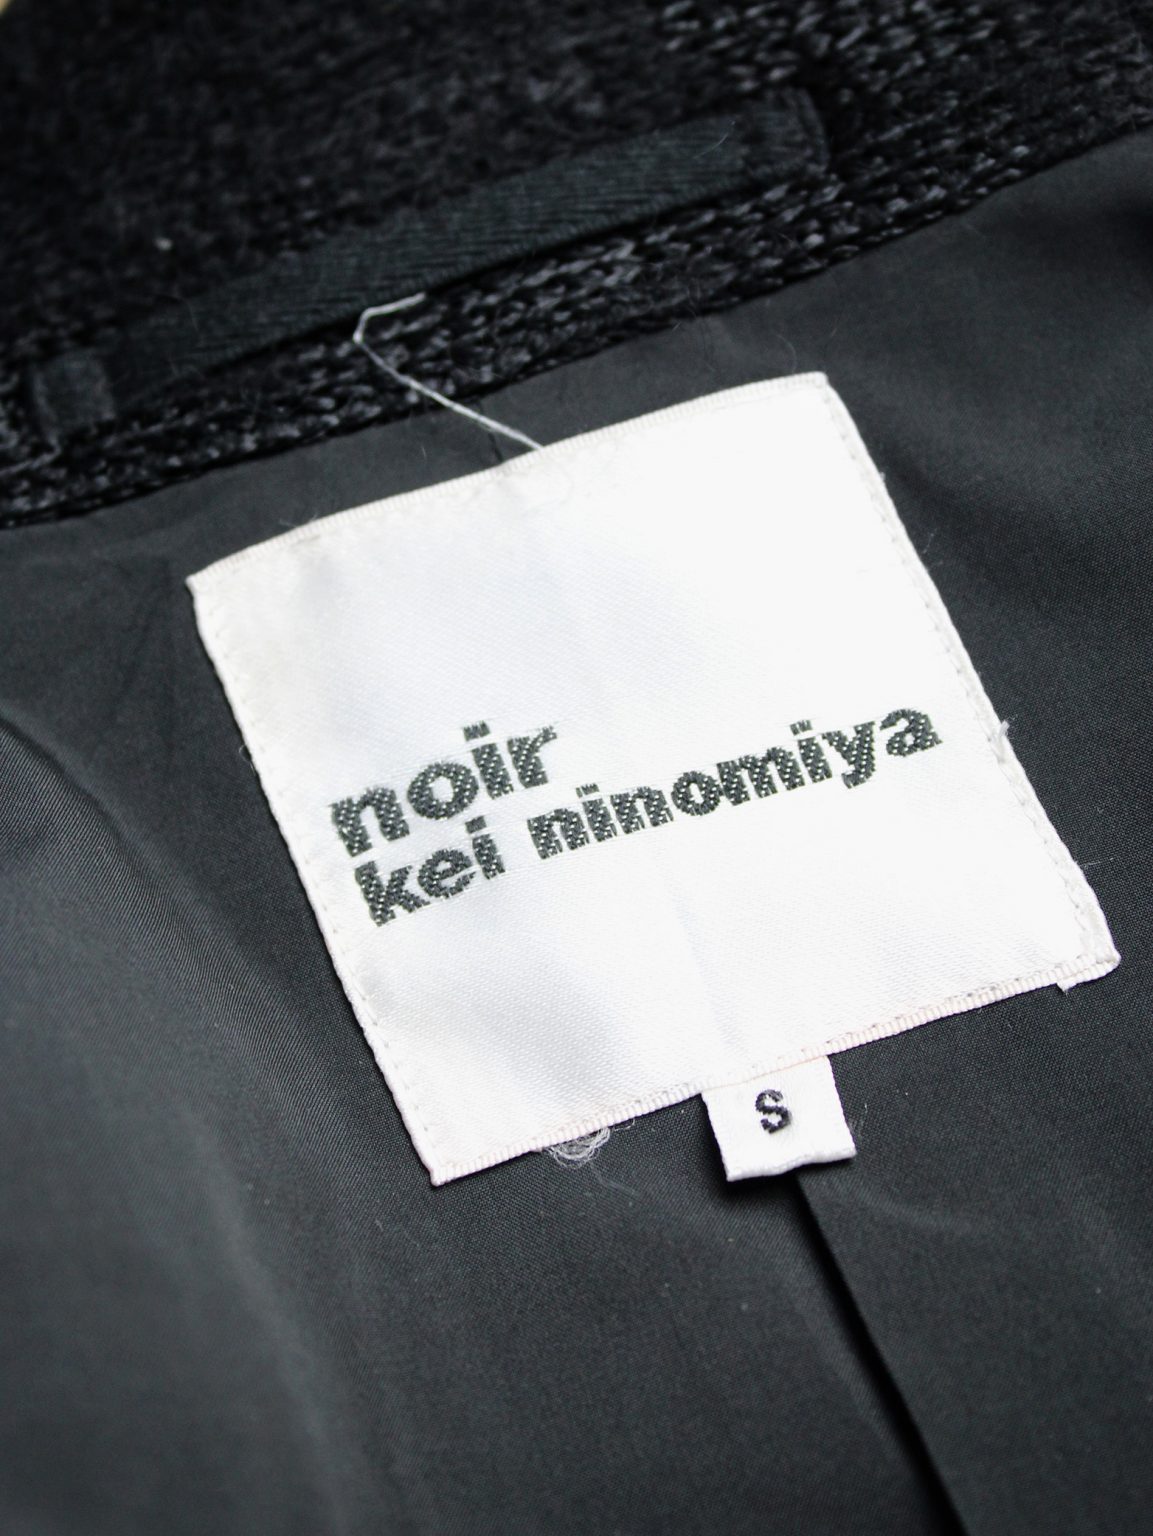 Noir Kei Ninomiya black bicker jacket with textured pied-de-poule motif — spring 2014